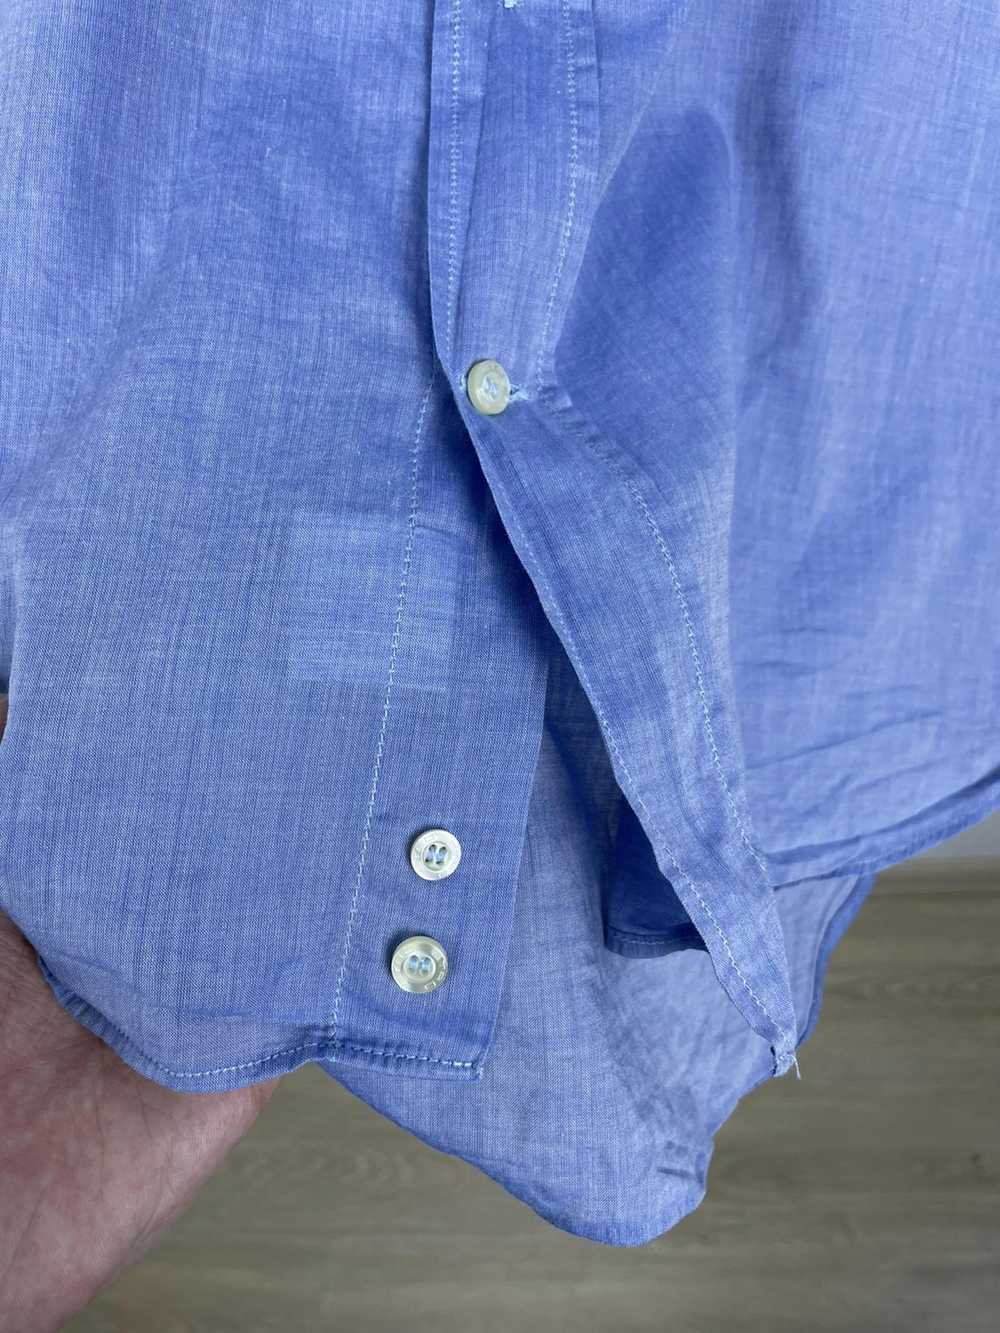 Etro Etro milano Men Shirt Button up size 41-L - image 6